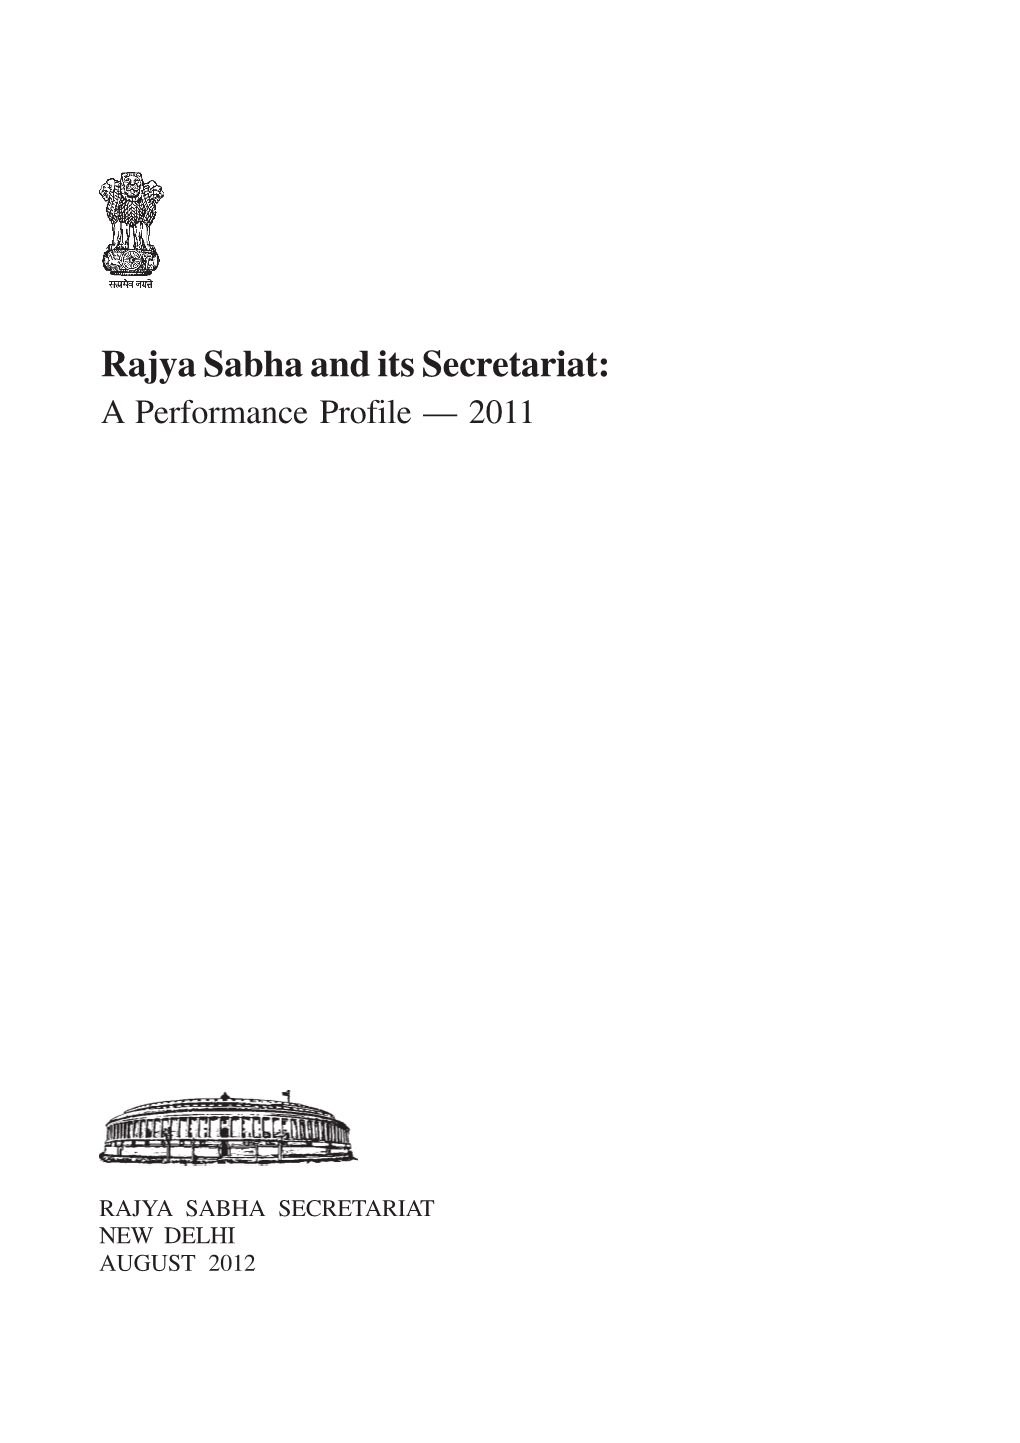 Rajya Sabha and Its Secretariat: a Performance Profile — 2011